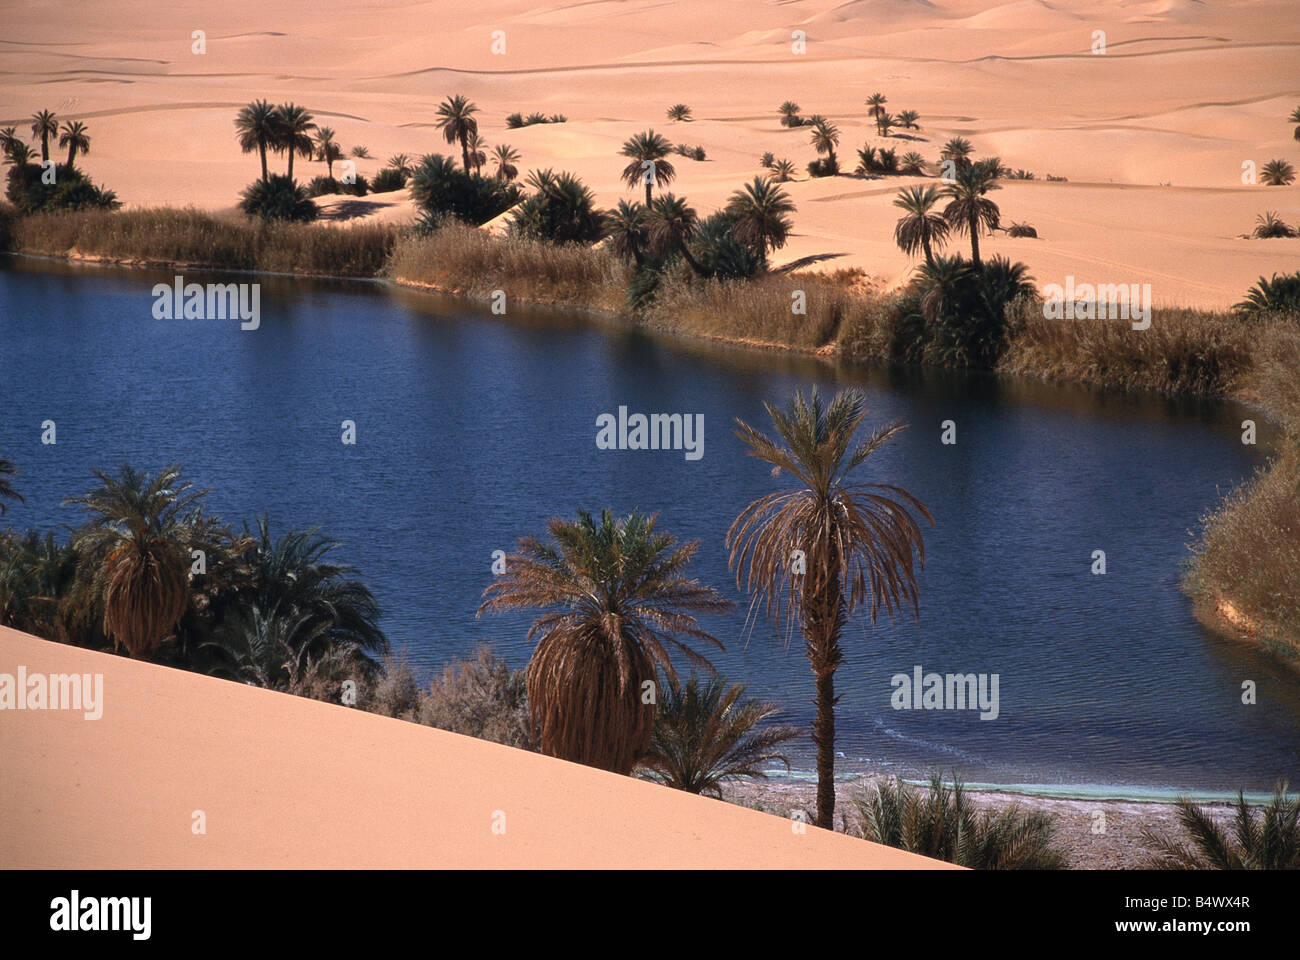 Umm Il Ma lake is a scenic lake, one of the Ubari lakes in the Ubari Sand Sea, Sahara Desert, Libya Stock Photo